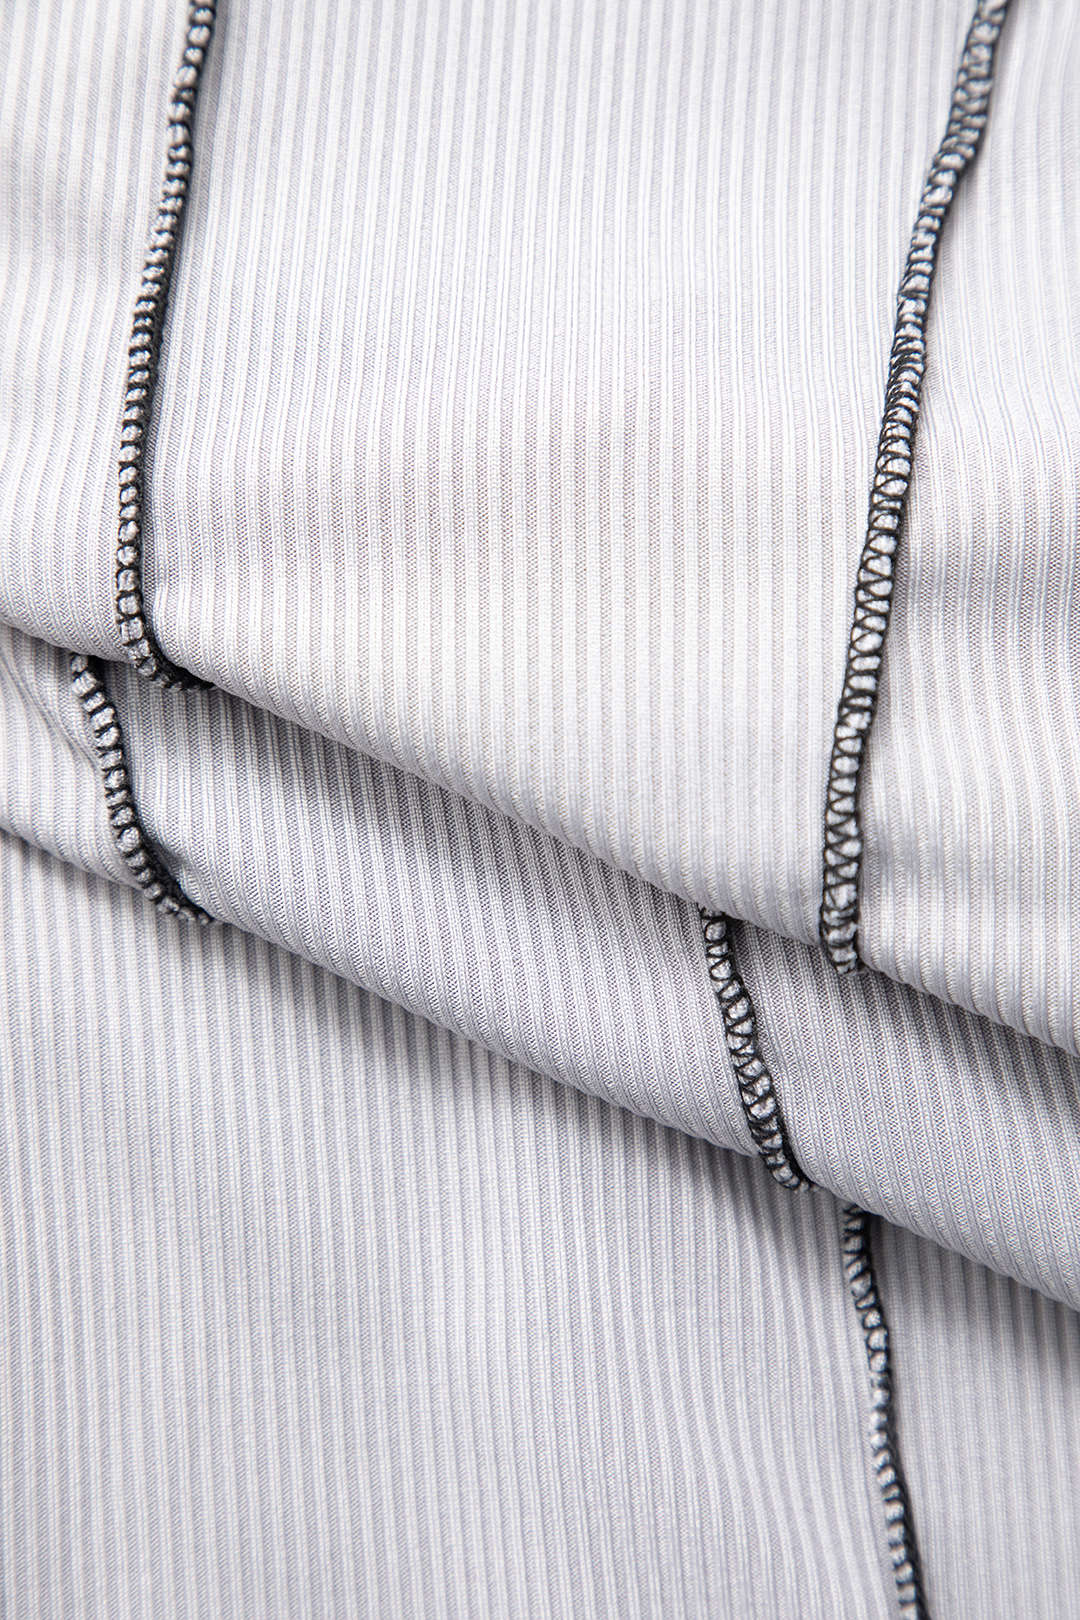 Round Neck Stitching Flare Sleeve Top